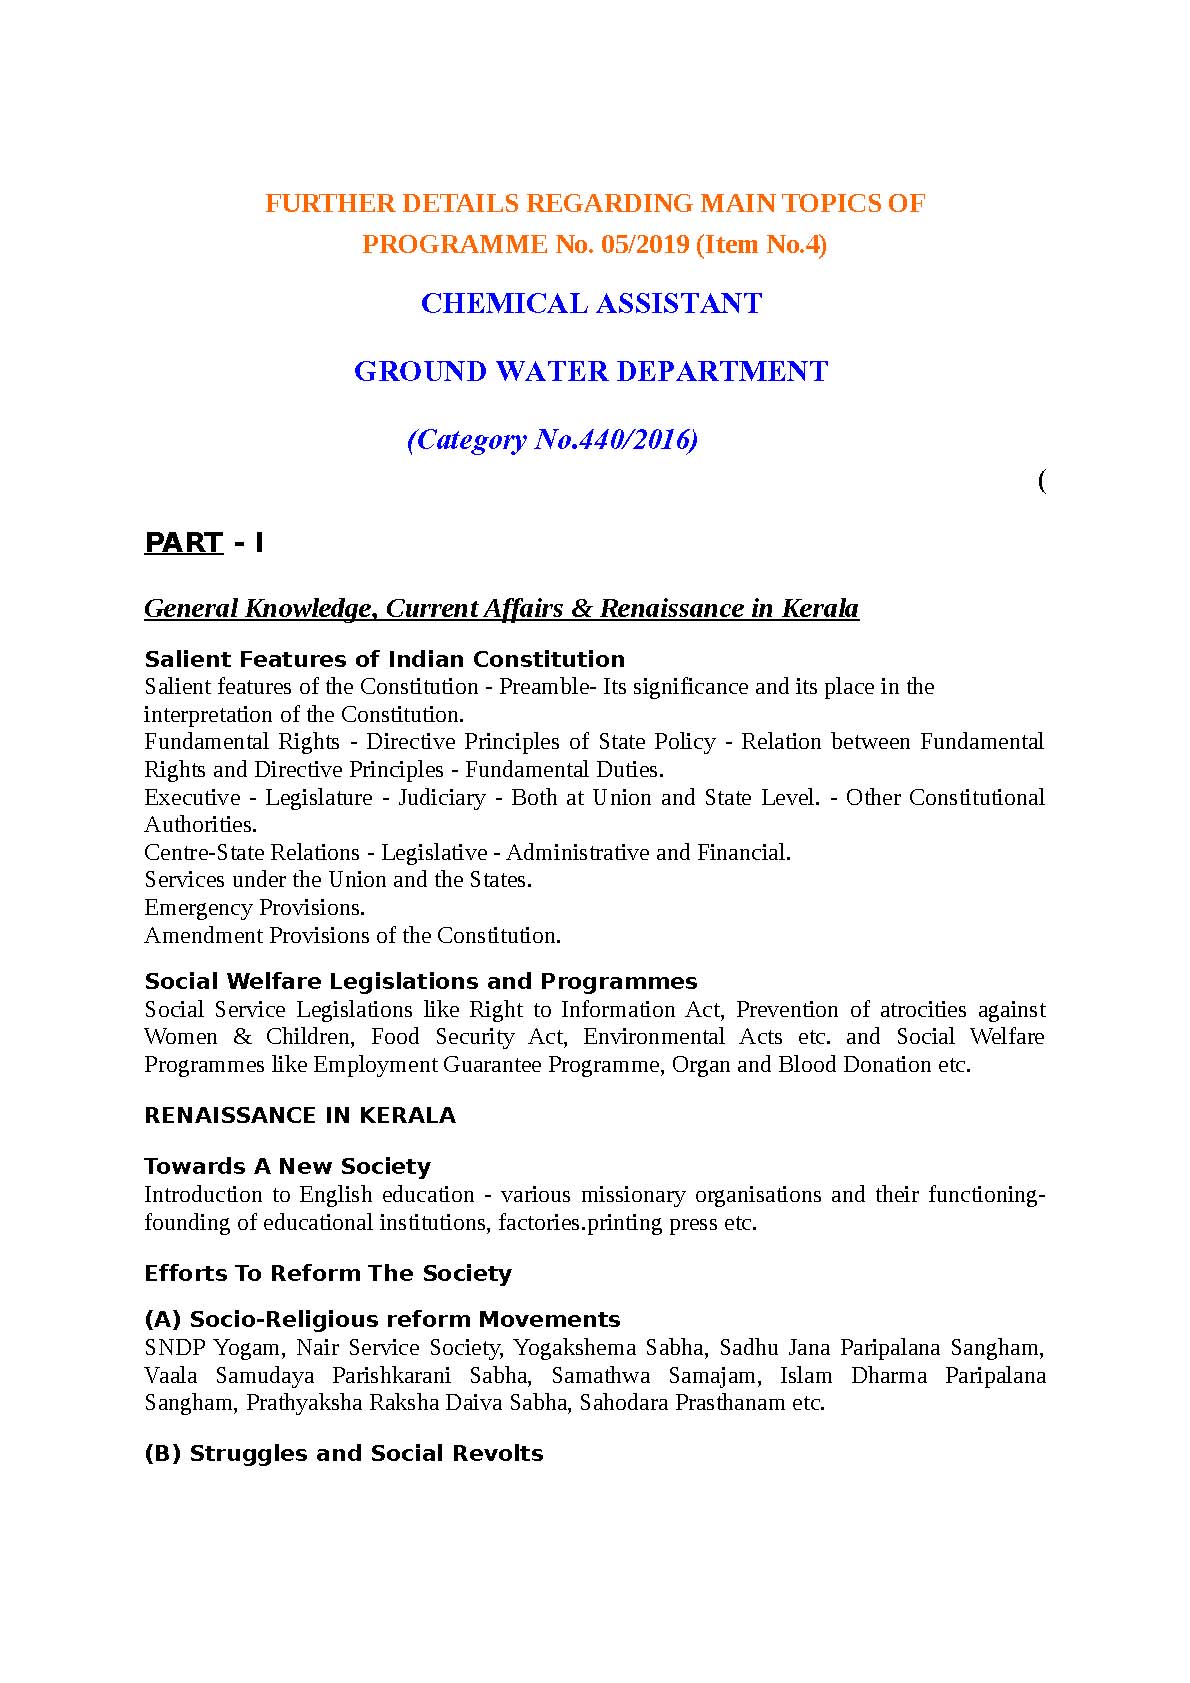 KPSC Exam Syllabus 2019 Chemical Assistant - Notification Image 1